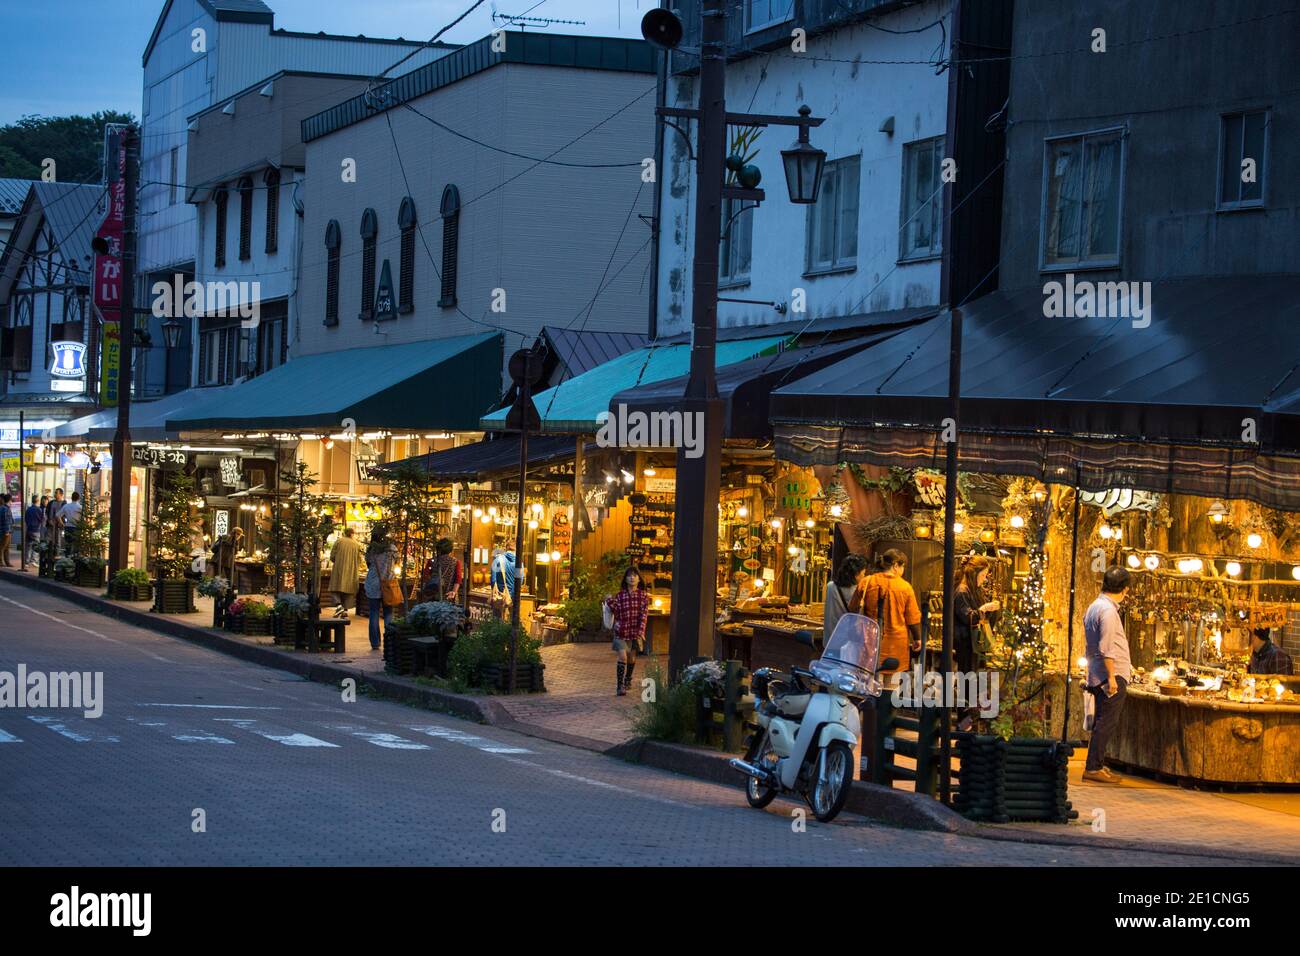 Market stalls and shops in village, Lake Akan, Hokkaido, Japan Stock Photo